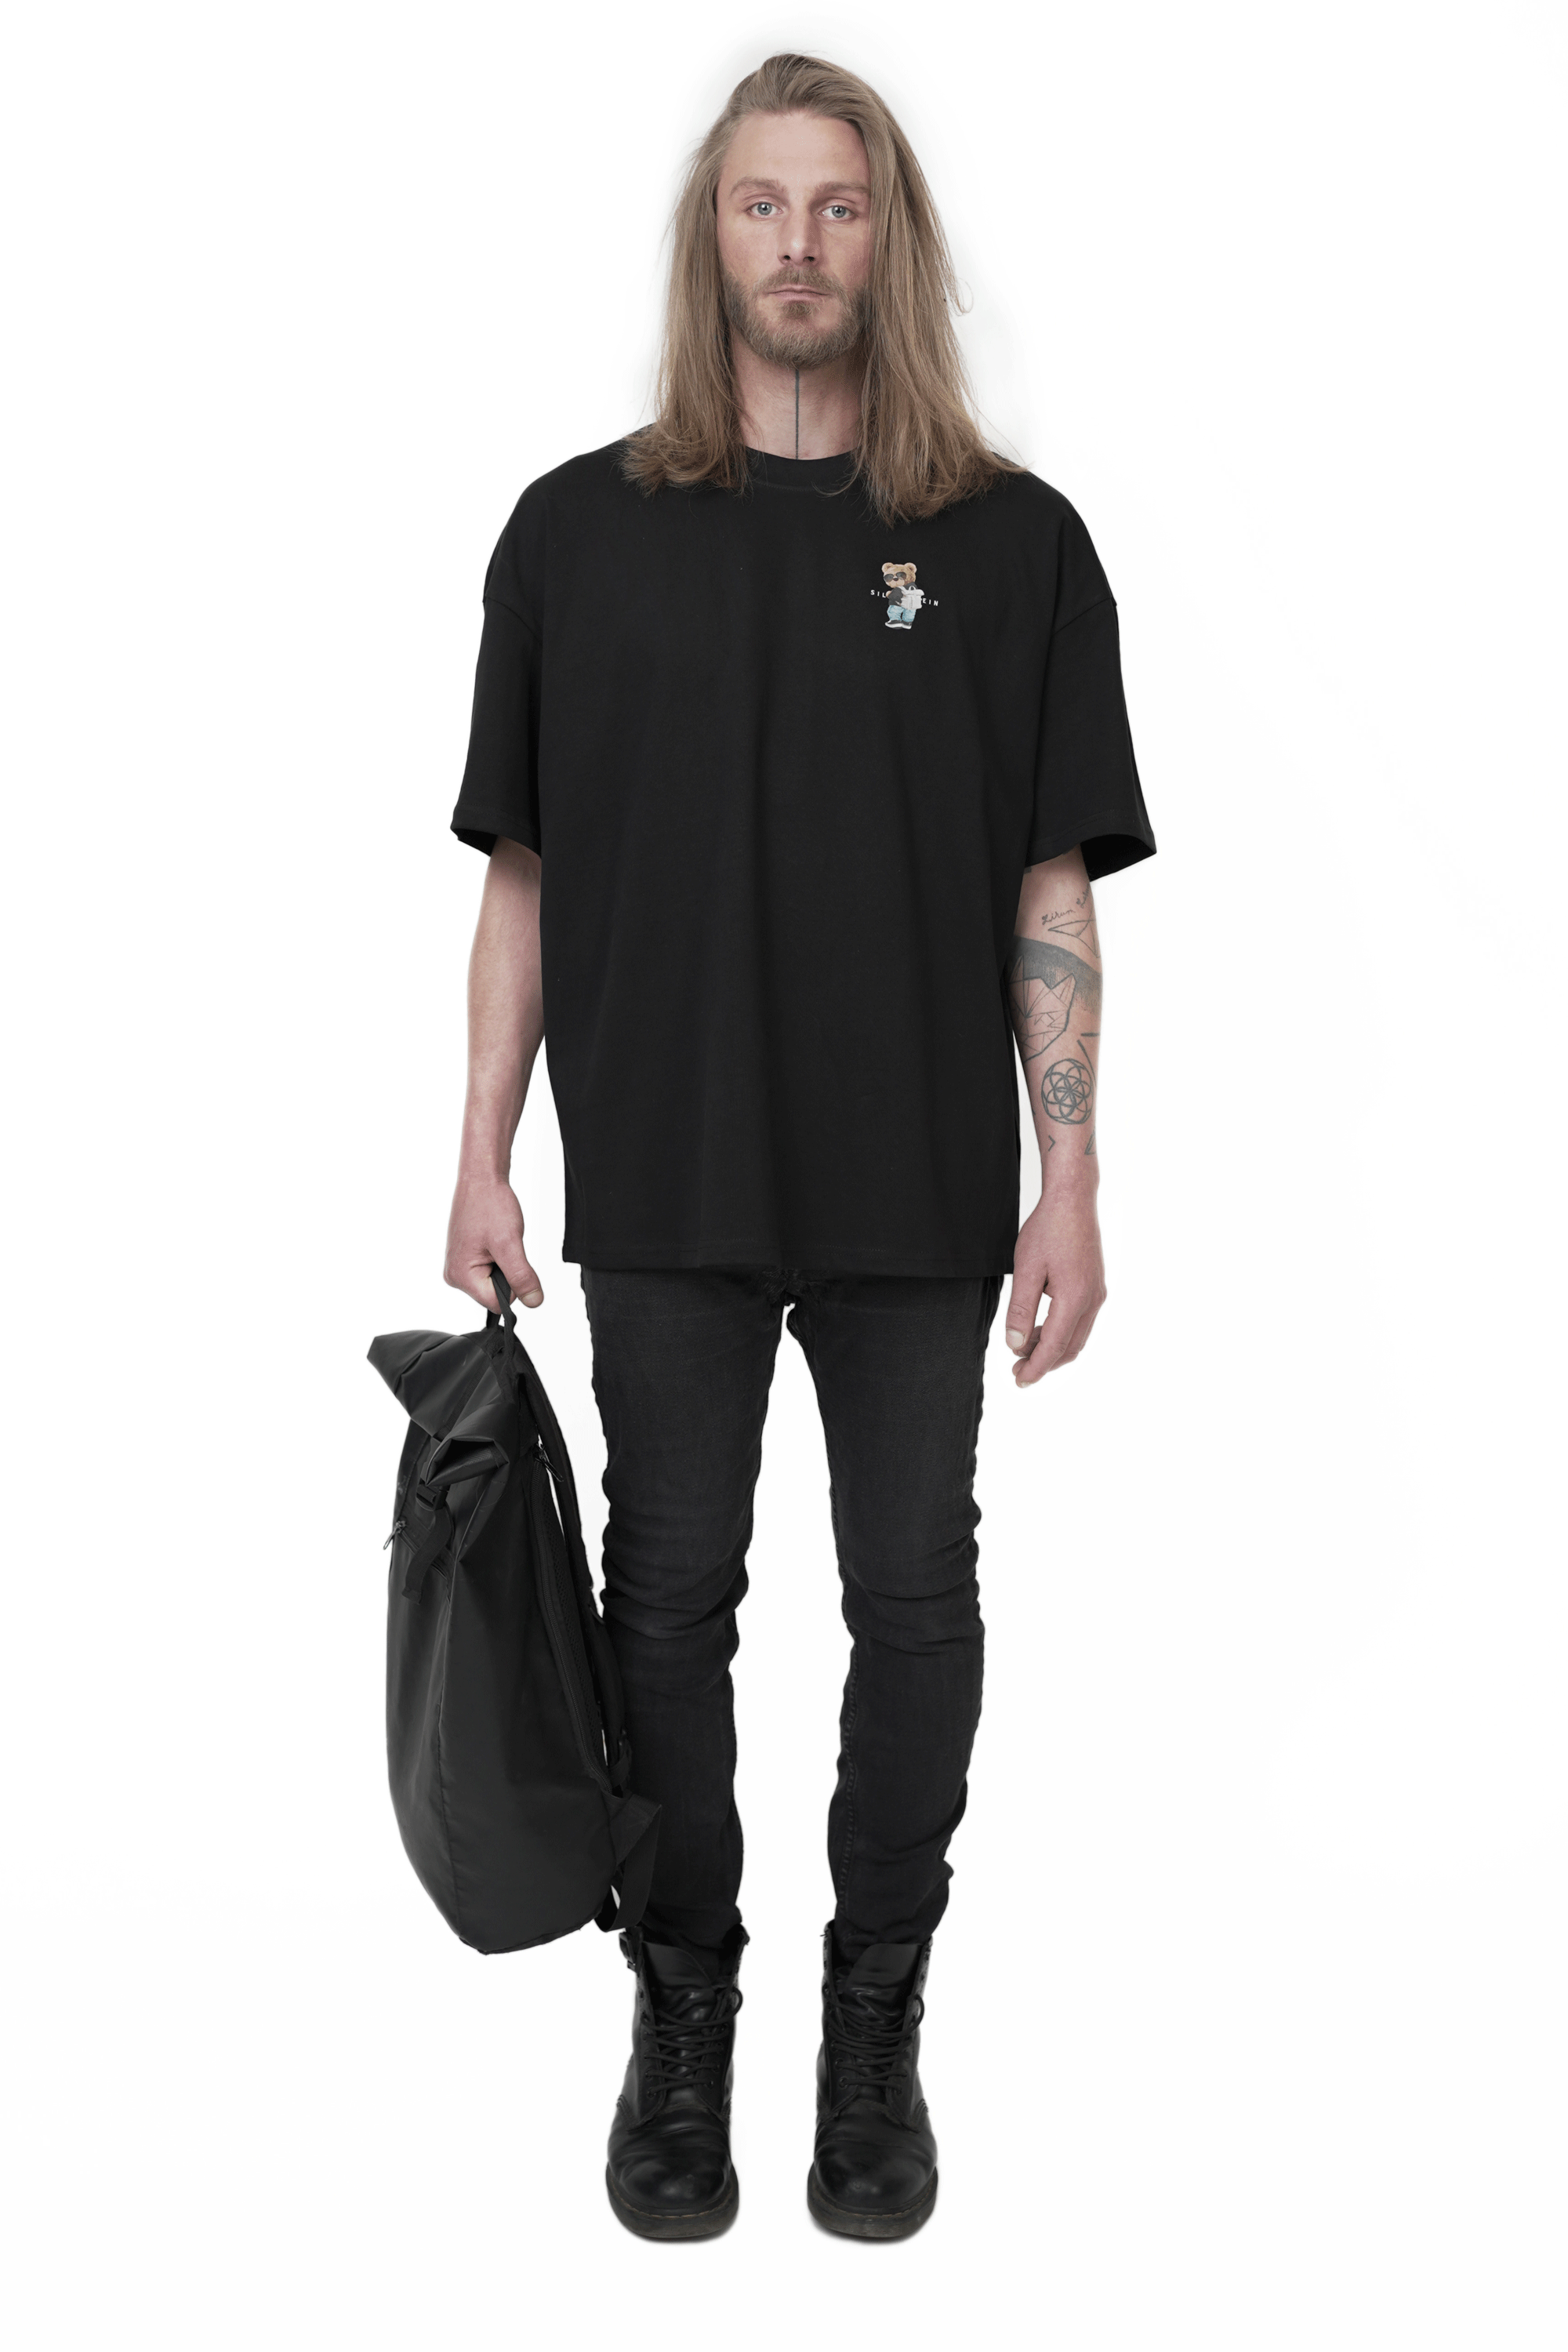 Black "Rockbag Teddy" Unisex T-Shirt